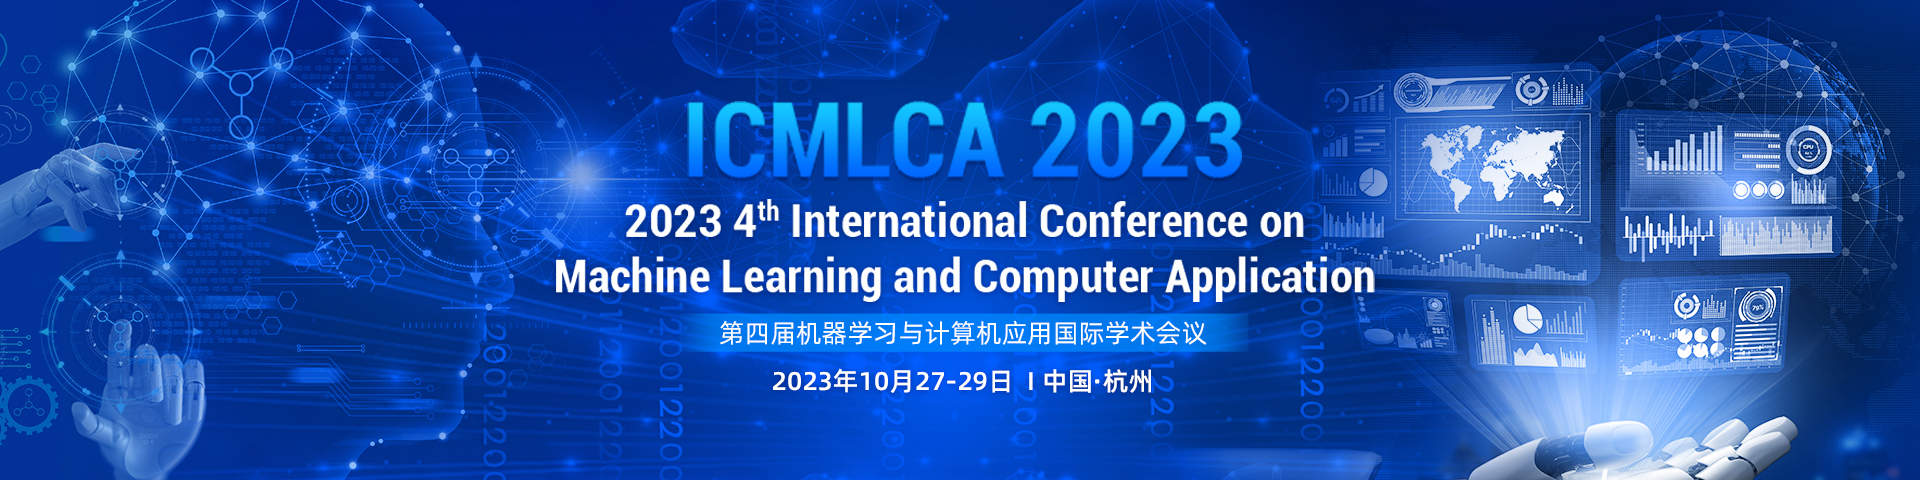 【EI/SCOPUS会议征稿】第四届机器学习与计算机应用国际学术会议(ICMLCA 2023)